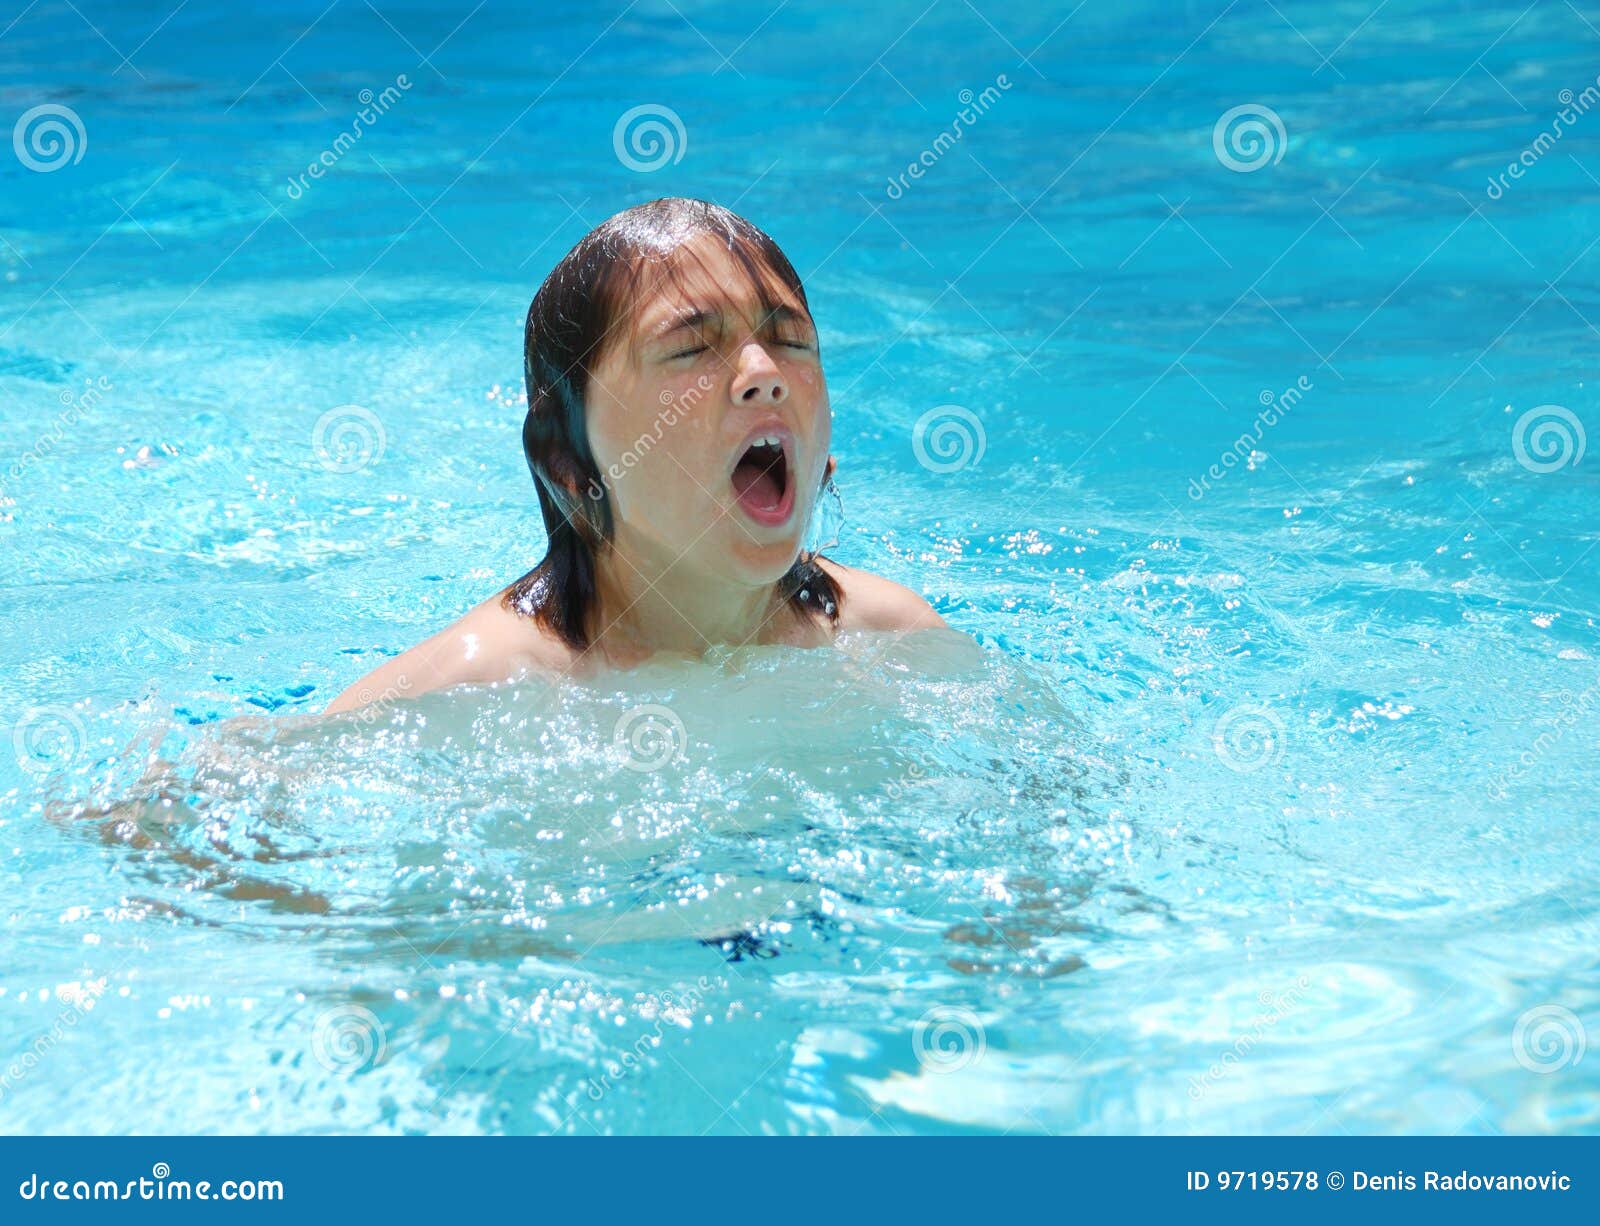 Teen Boy Swimming In Pool Royalty Free Stock Photos 